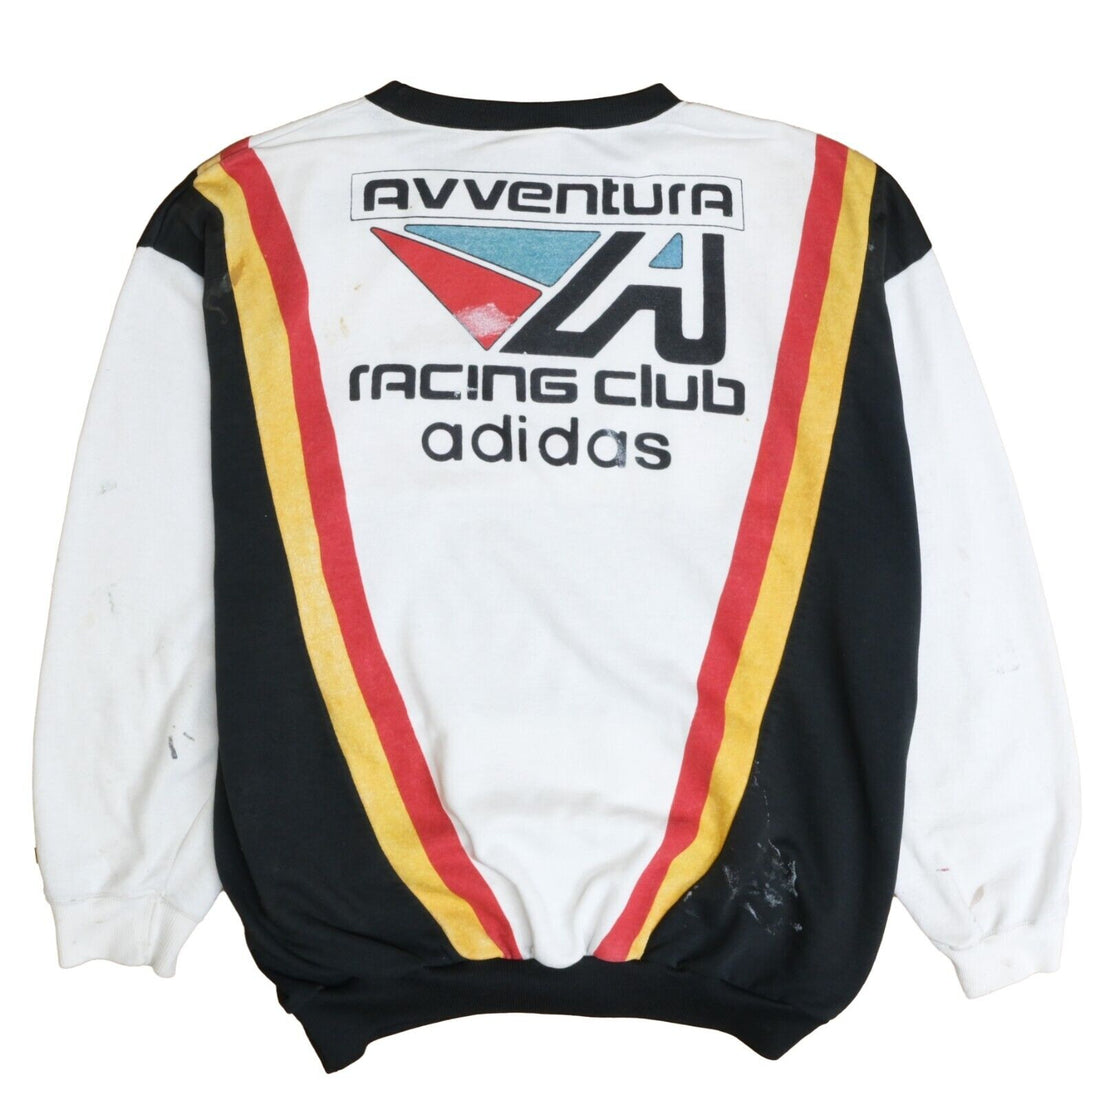 Vintage Adidas Avventura Effeto Formula Racing Club Sweatshirt Size Large